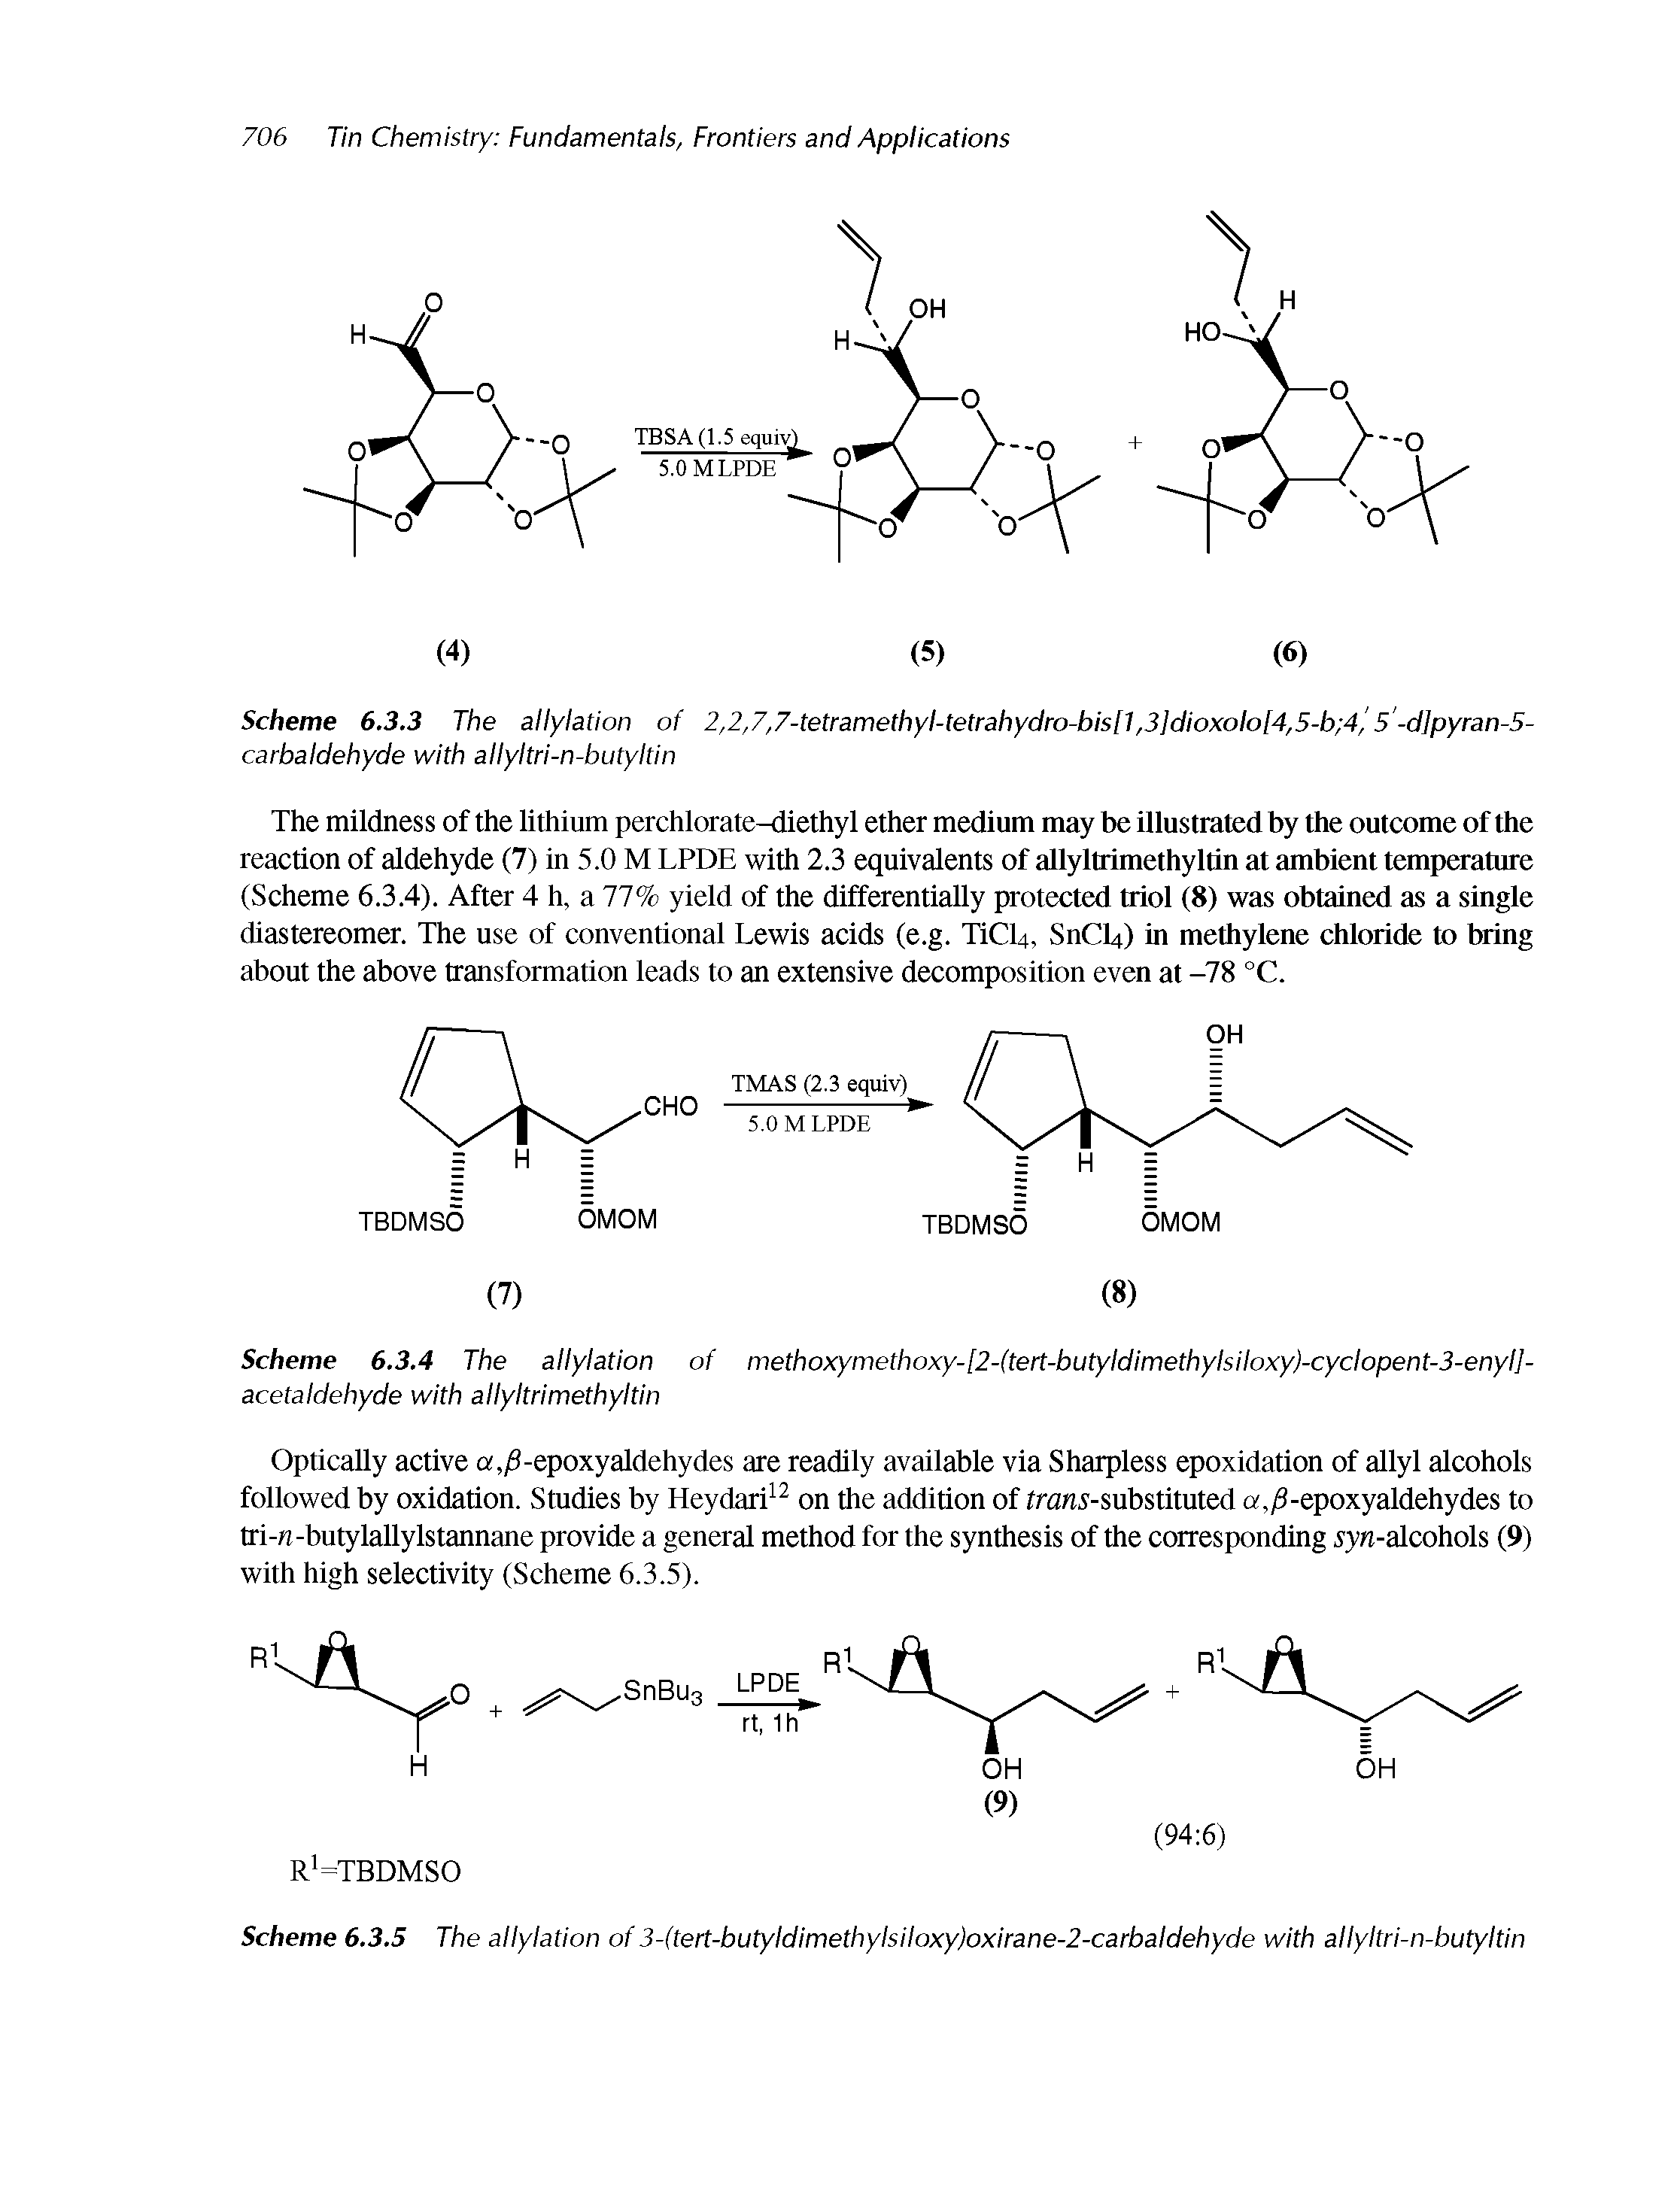 Scheme 6.3.3 The allylation of 2,2,7,7-tetramethyl-tetrahydro-bis[l,3]dioxolo[4,5-b 4 5 -d]pyran-5-carbaldehyde with allyltri-n-butyltin...